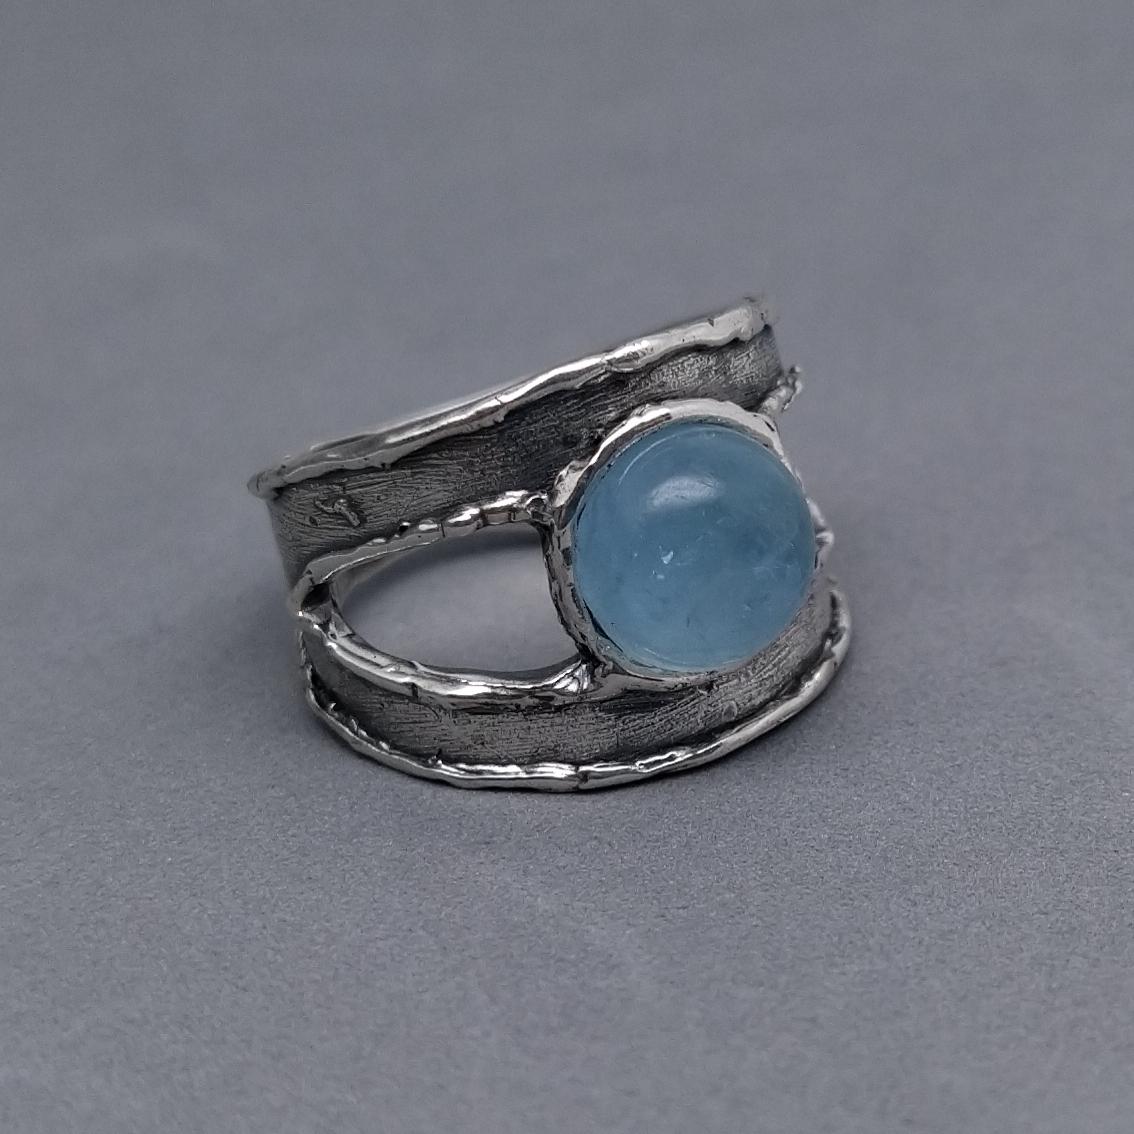 burnished silver 925% ring and aquamarine stone